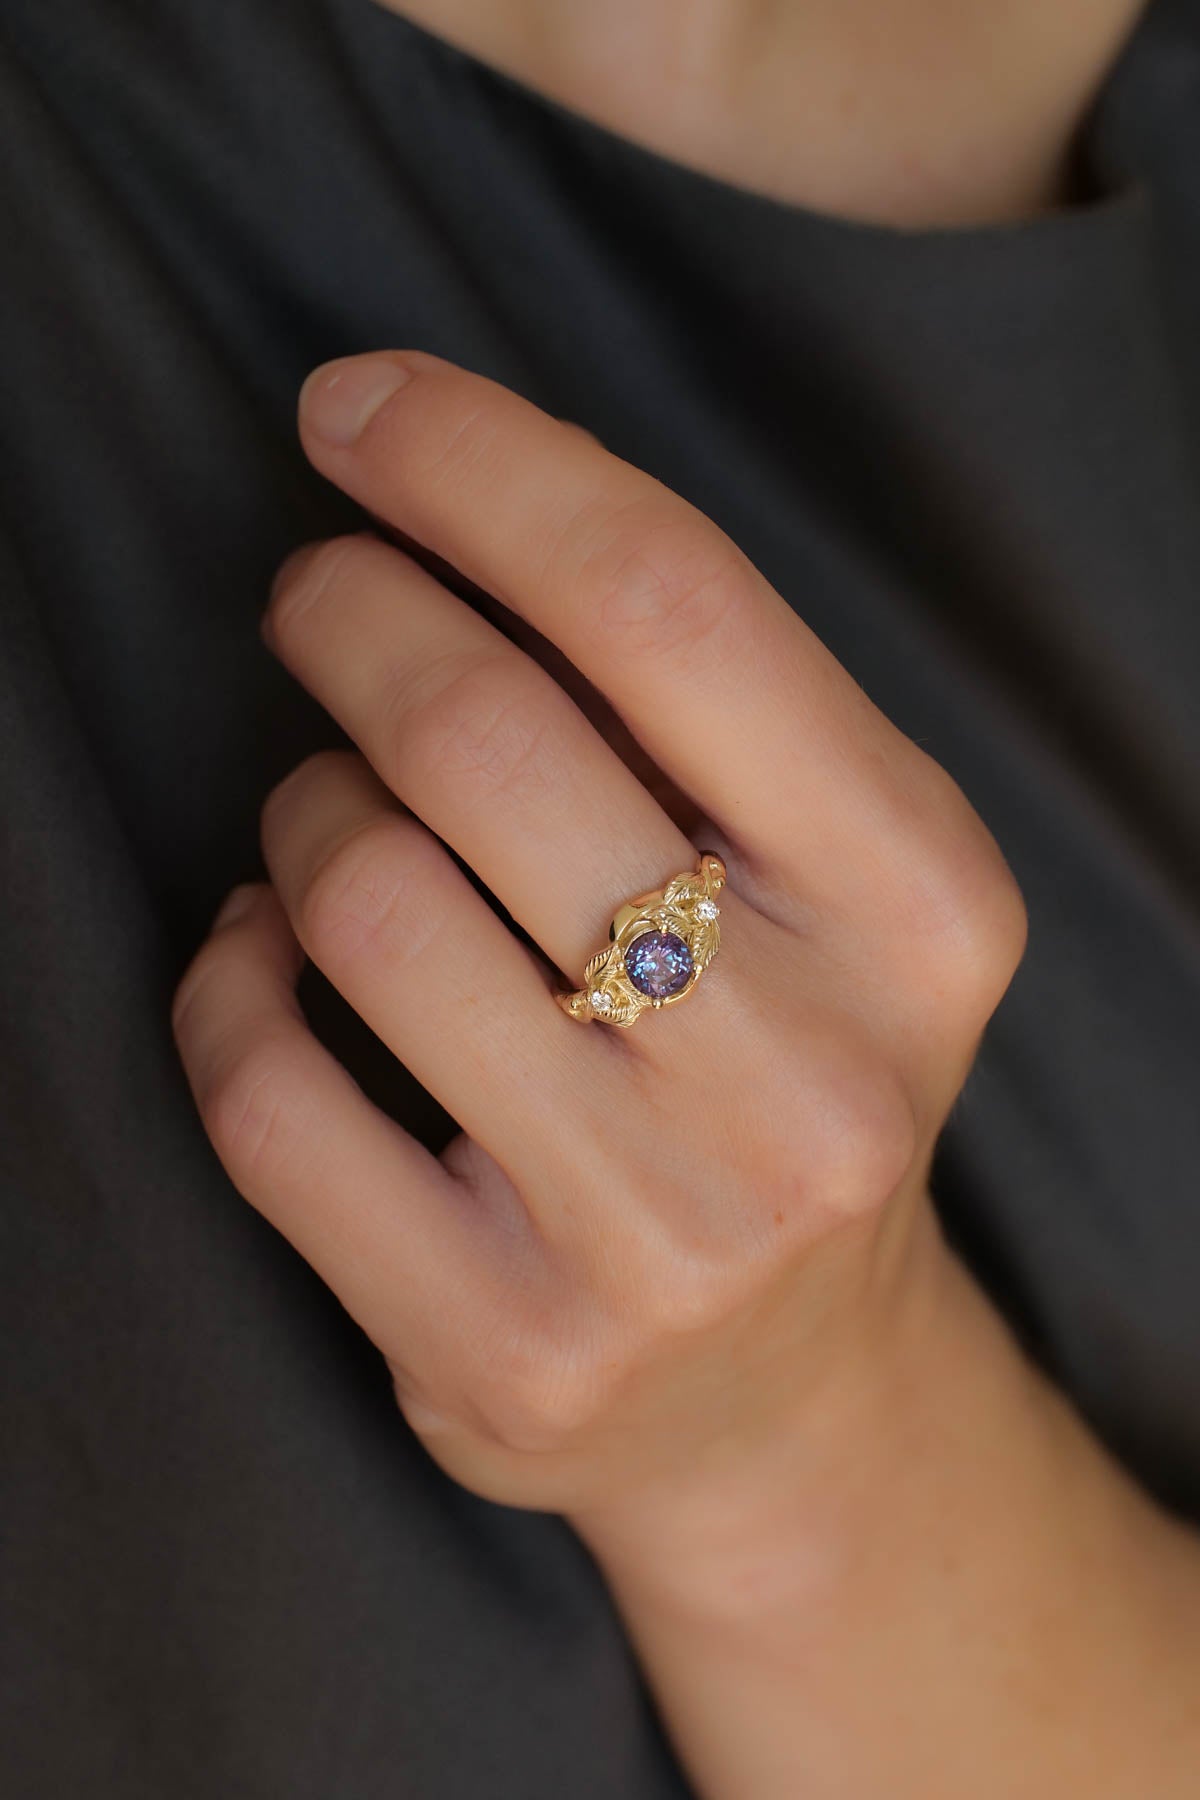 Alexandrite engagement ring, colour changing stone ring / Azalea - Eden Garden Jewelry™